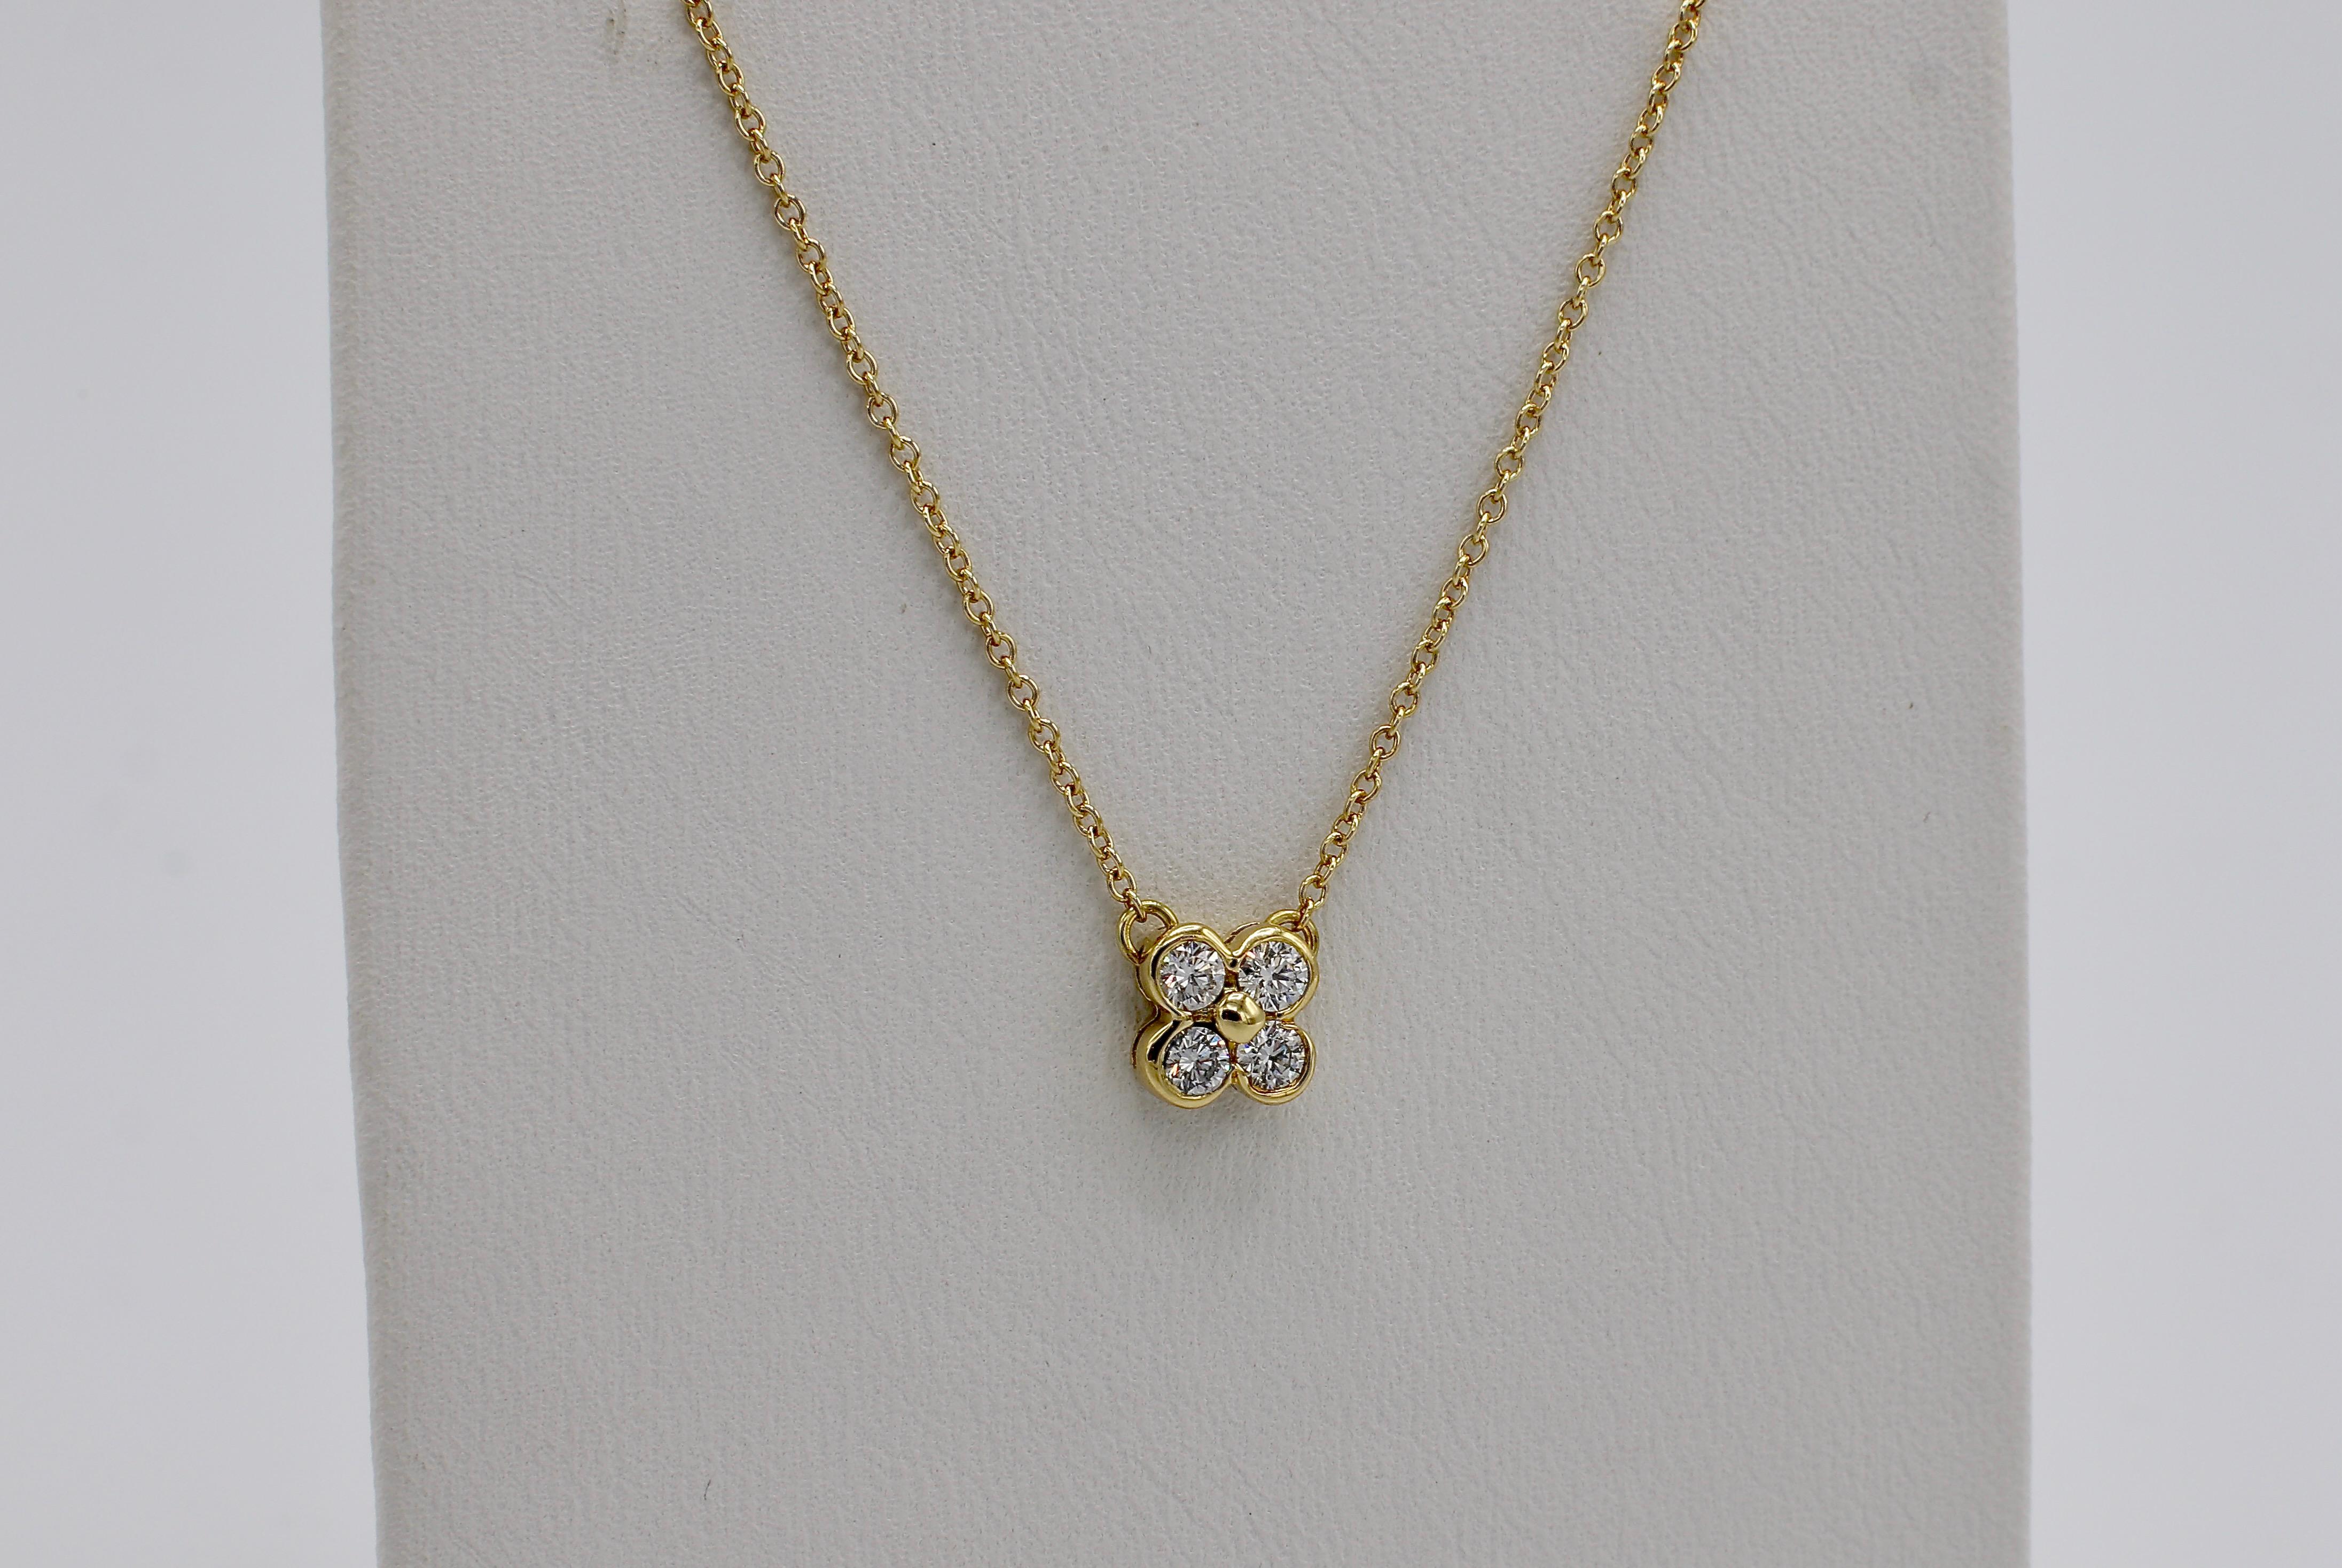 Tiffany & Co. 18 Karat Yellow Gold .21 Carat Diamond Bezel Set Cluster Pendant Necklace 16 inch chain 
Metal: 18k yellow gold
Weight: 2.17 grams
Diamonds: .21 CTW F-G VS
Pendant diameter: 6.2MM
Chain length: 16 inches

